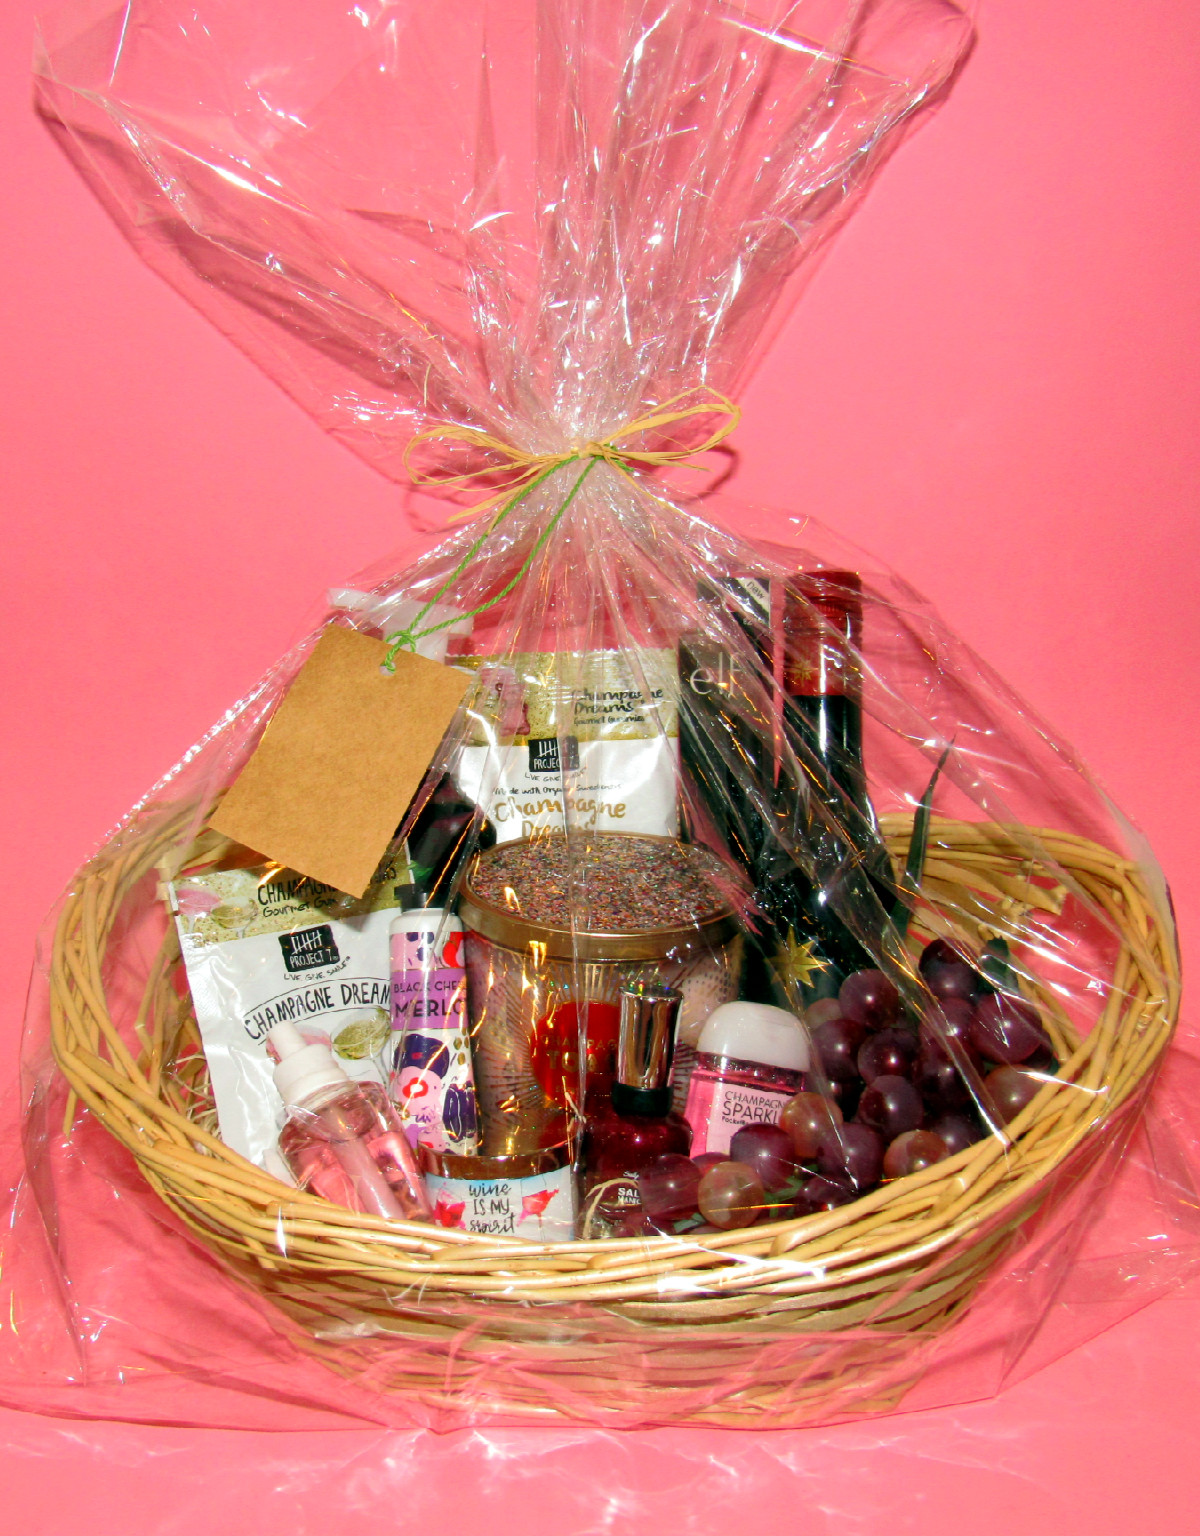 Make a Wish Birthday Wine Gift Basket